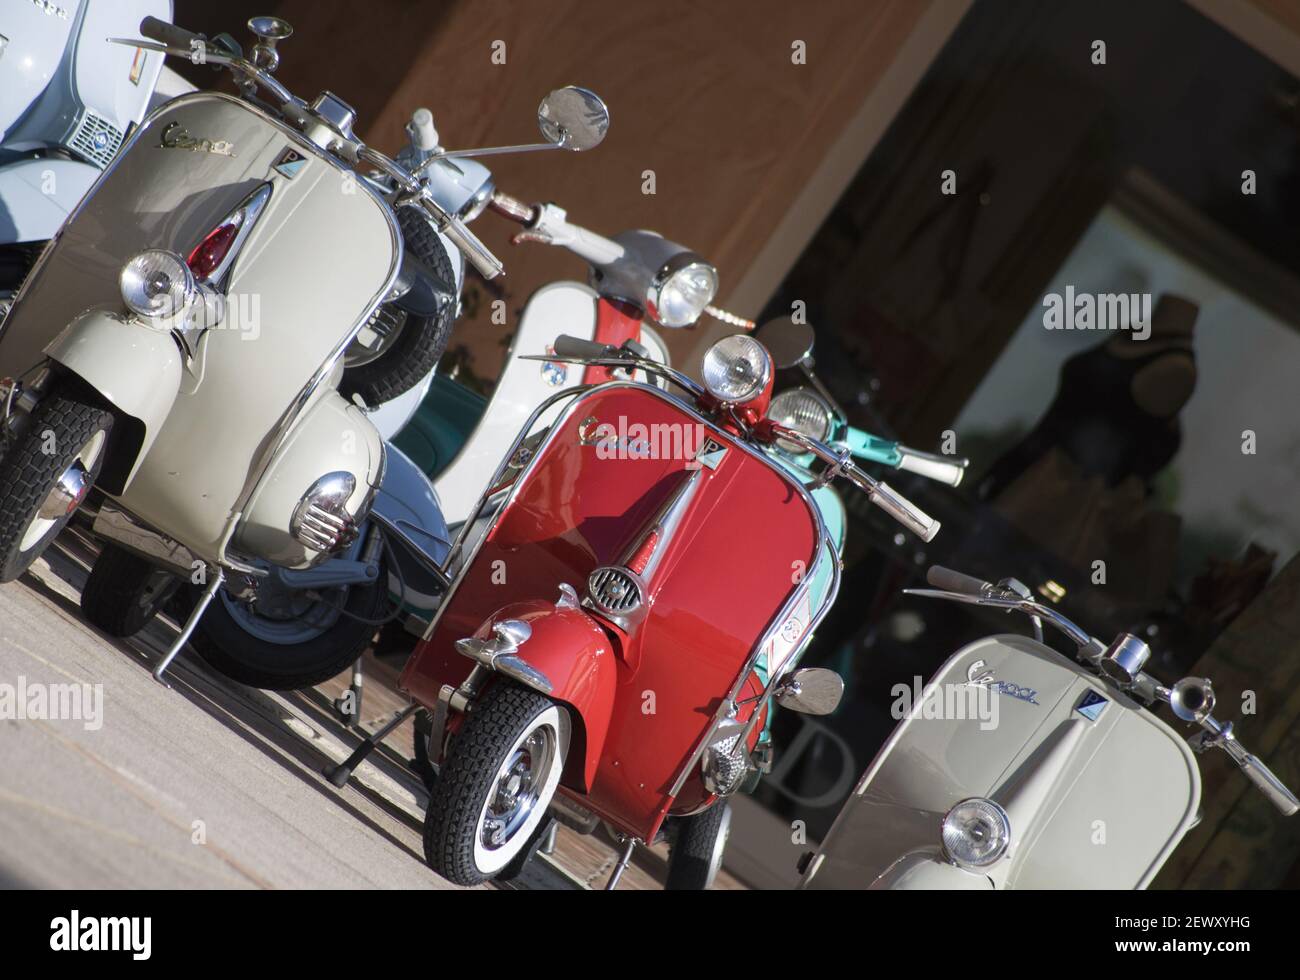 PORTO VERVO, ITALY - Aug 29, 2016: Porto Cervo, Italy - June 29, 2016: Piaggio Vespa vintage sprint motor scooter motorbike motorcycle Stock Photo